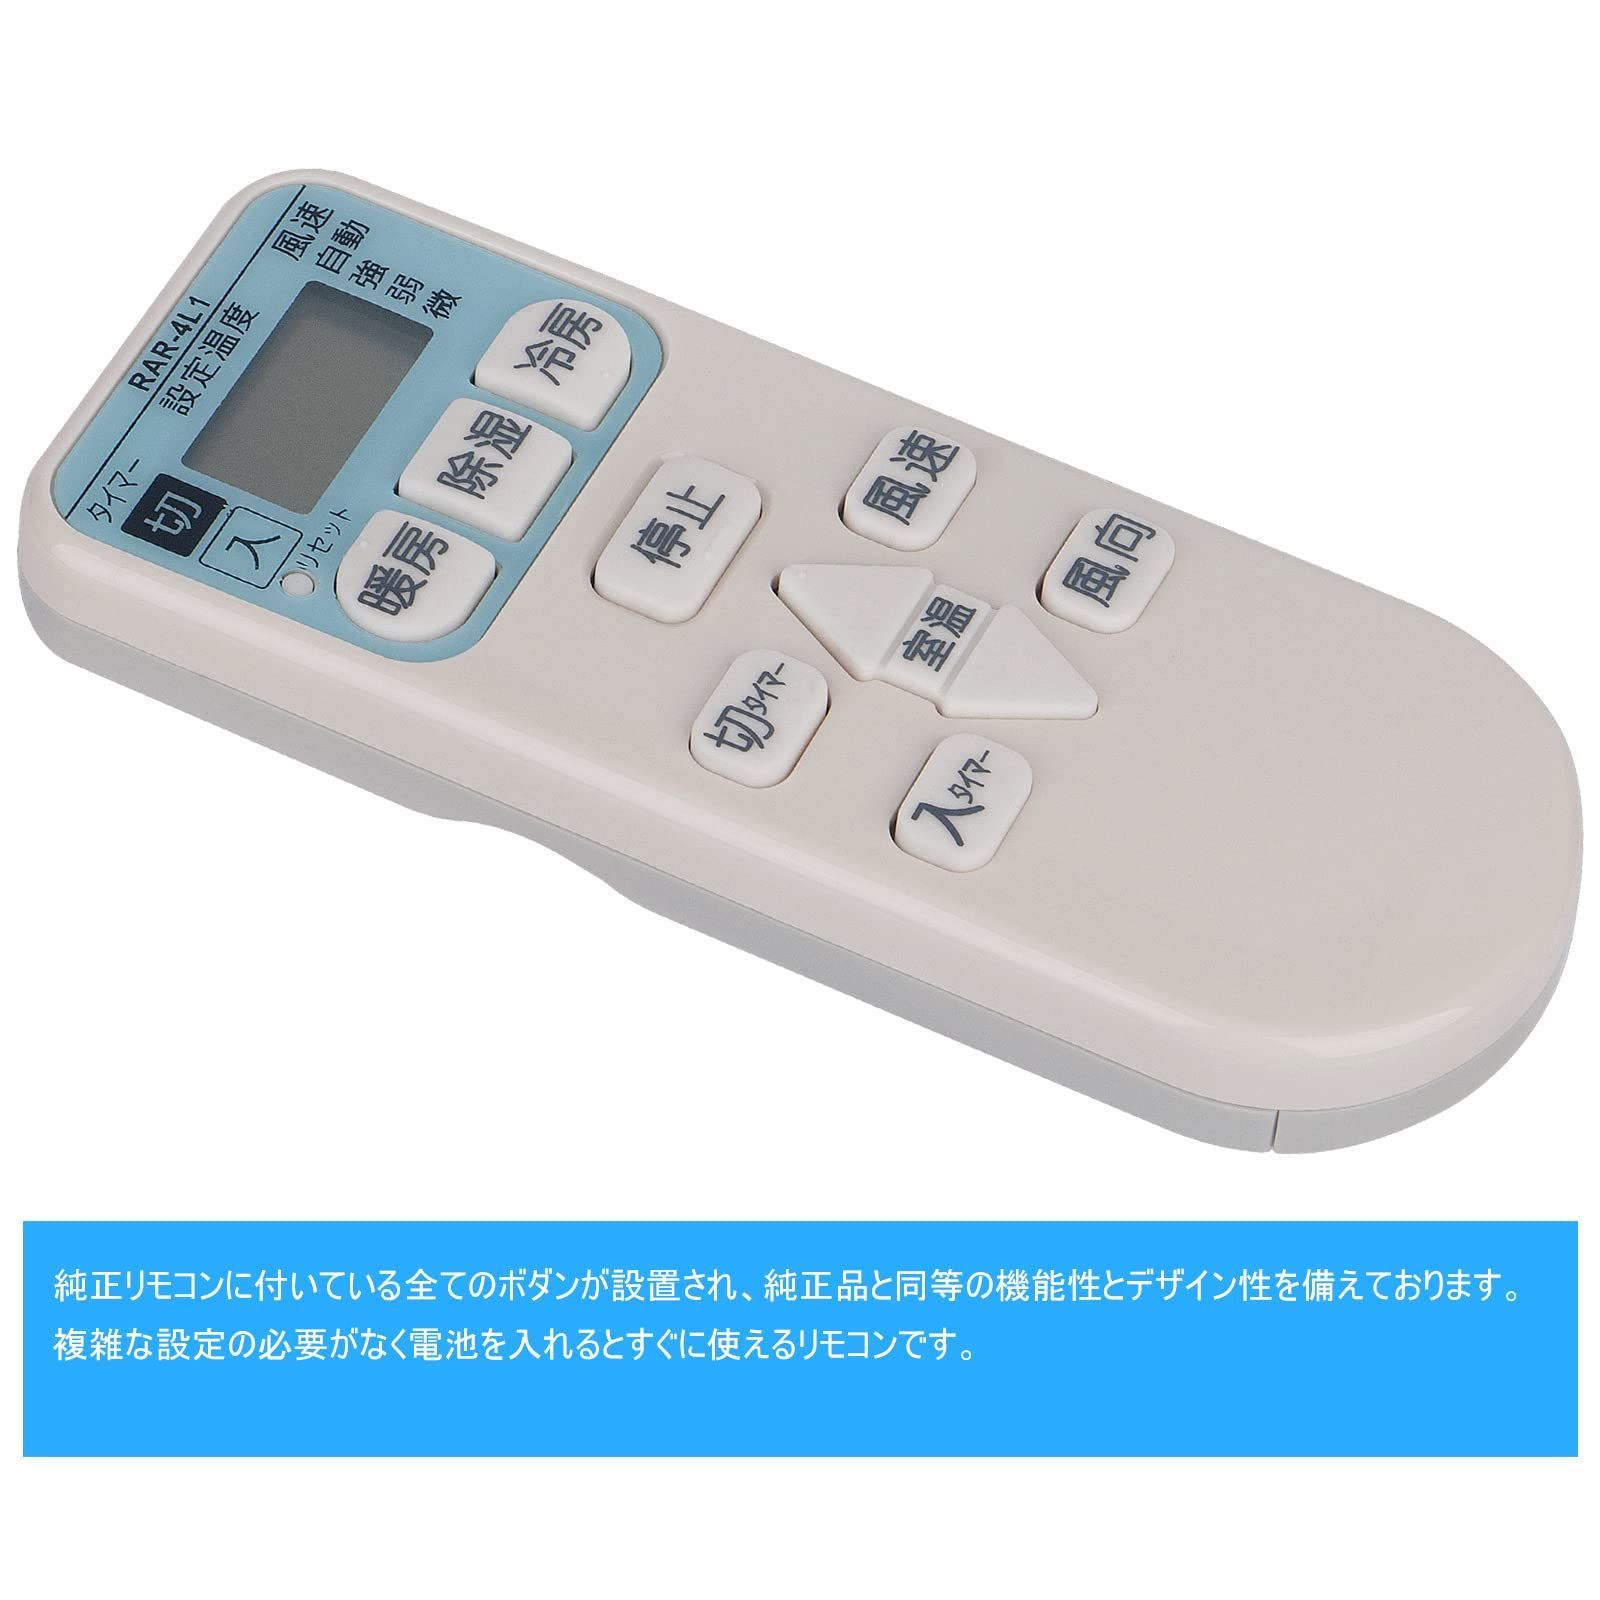 winflike 代替リモコン Compatible with RAR-4L1 (代替品) 日立 Hitachi 白くまくん エアコン用設定